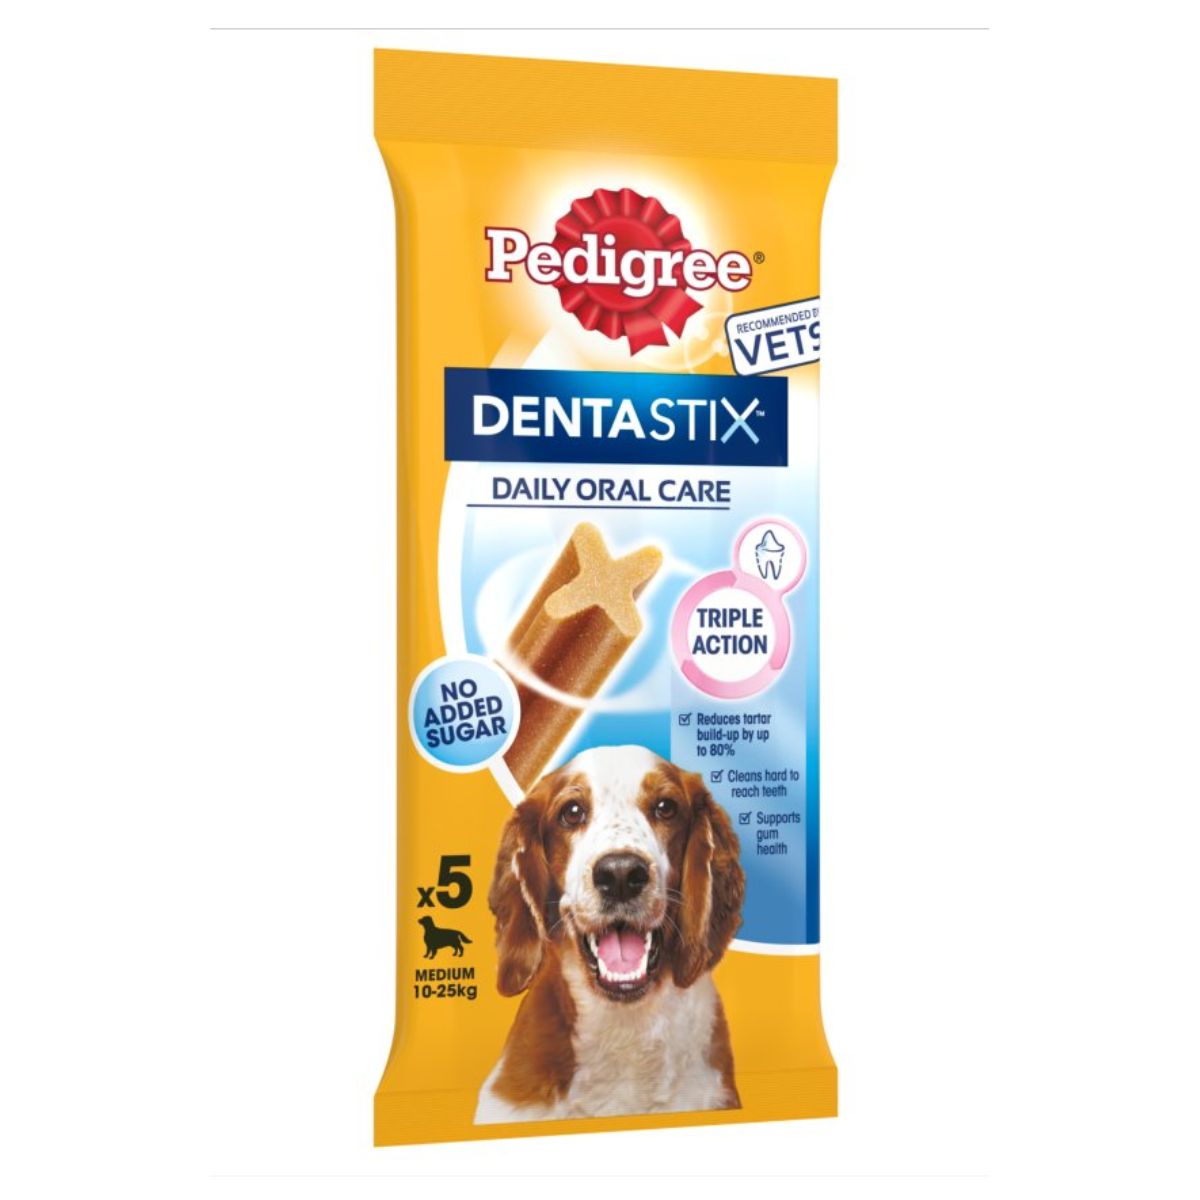 Pedigree Dentastix Daily Adult Medium Dog Treats 5 x Dental Sticks - 128g for dogs.